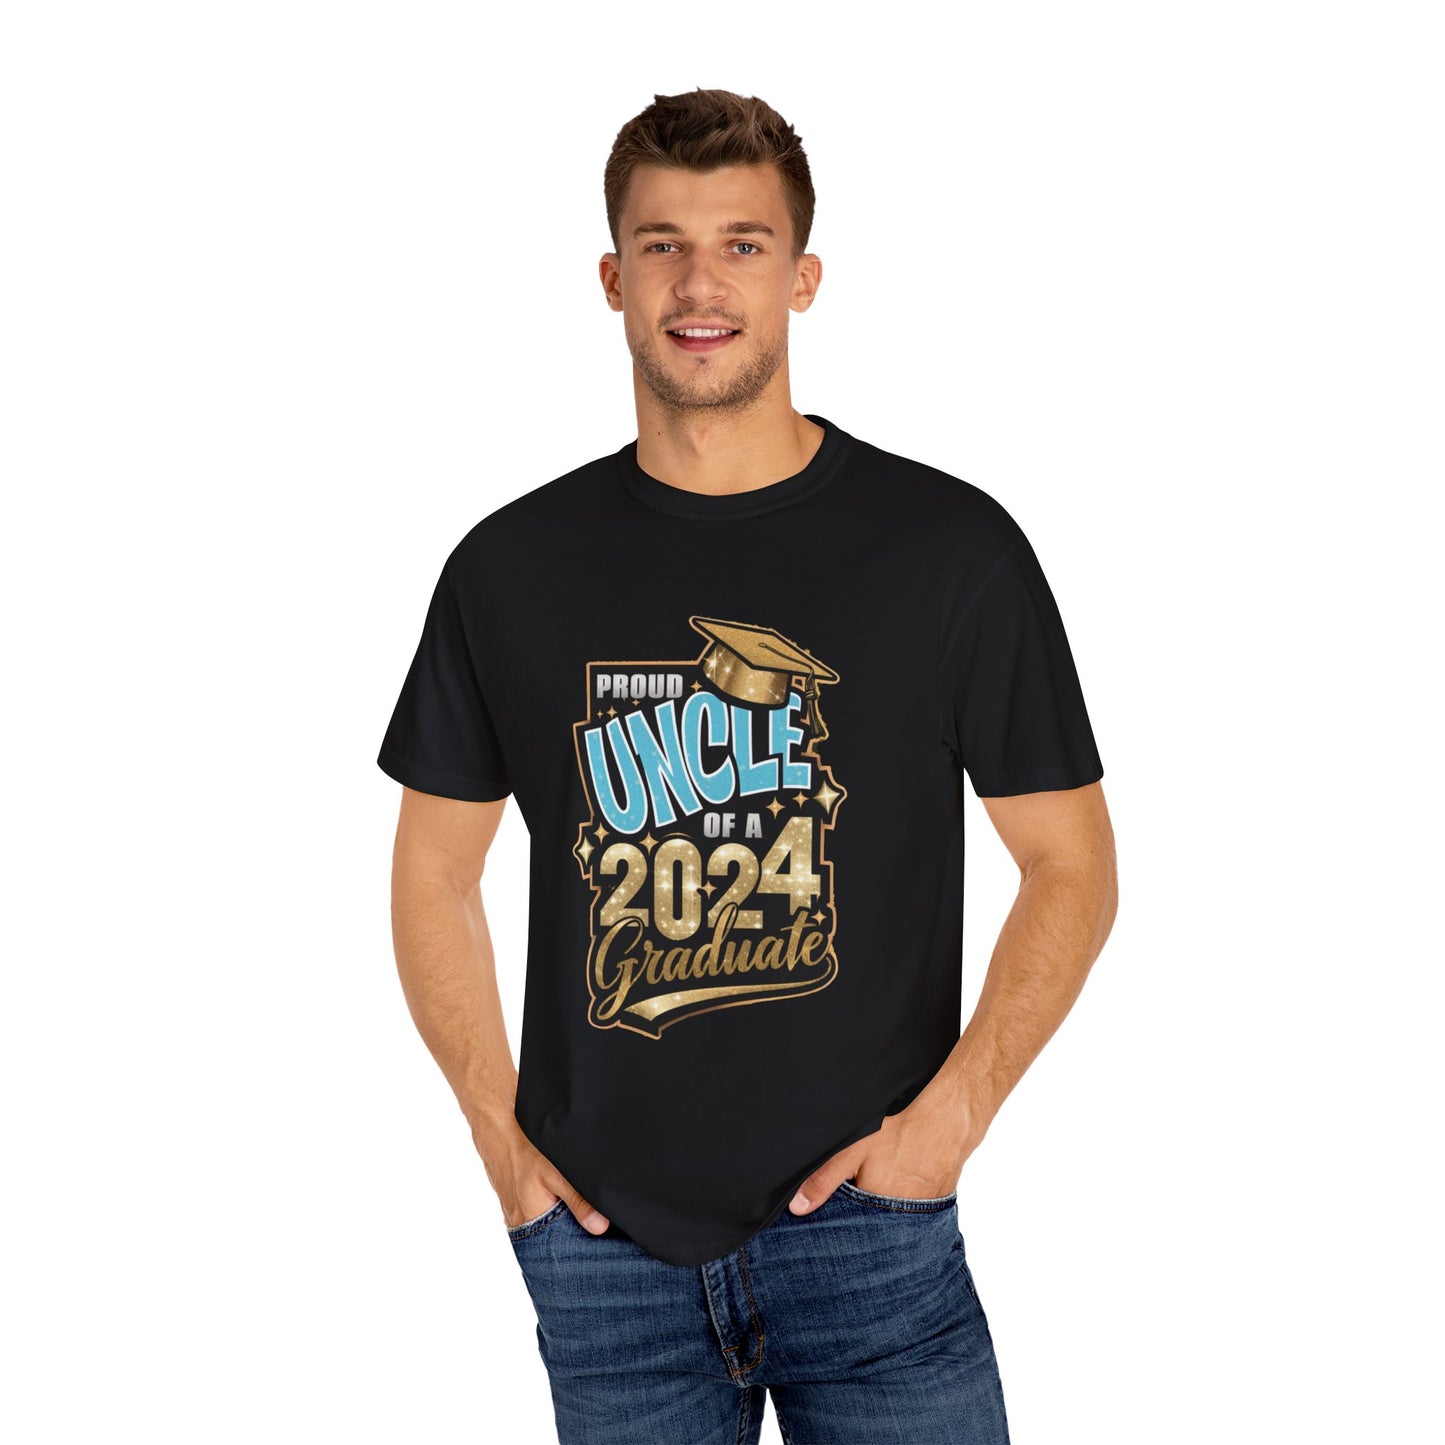 Proud Uncle of a 2024 Graduate Unisex Garment-dyed T-shirt Cotton Funny Humorous Graphic Soft Premium Unisex Men Women Black T-shirt Birthday Gift-18